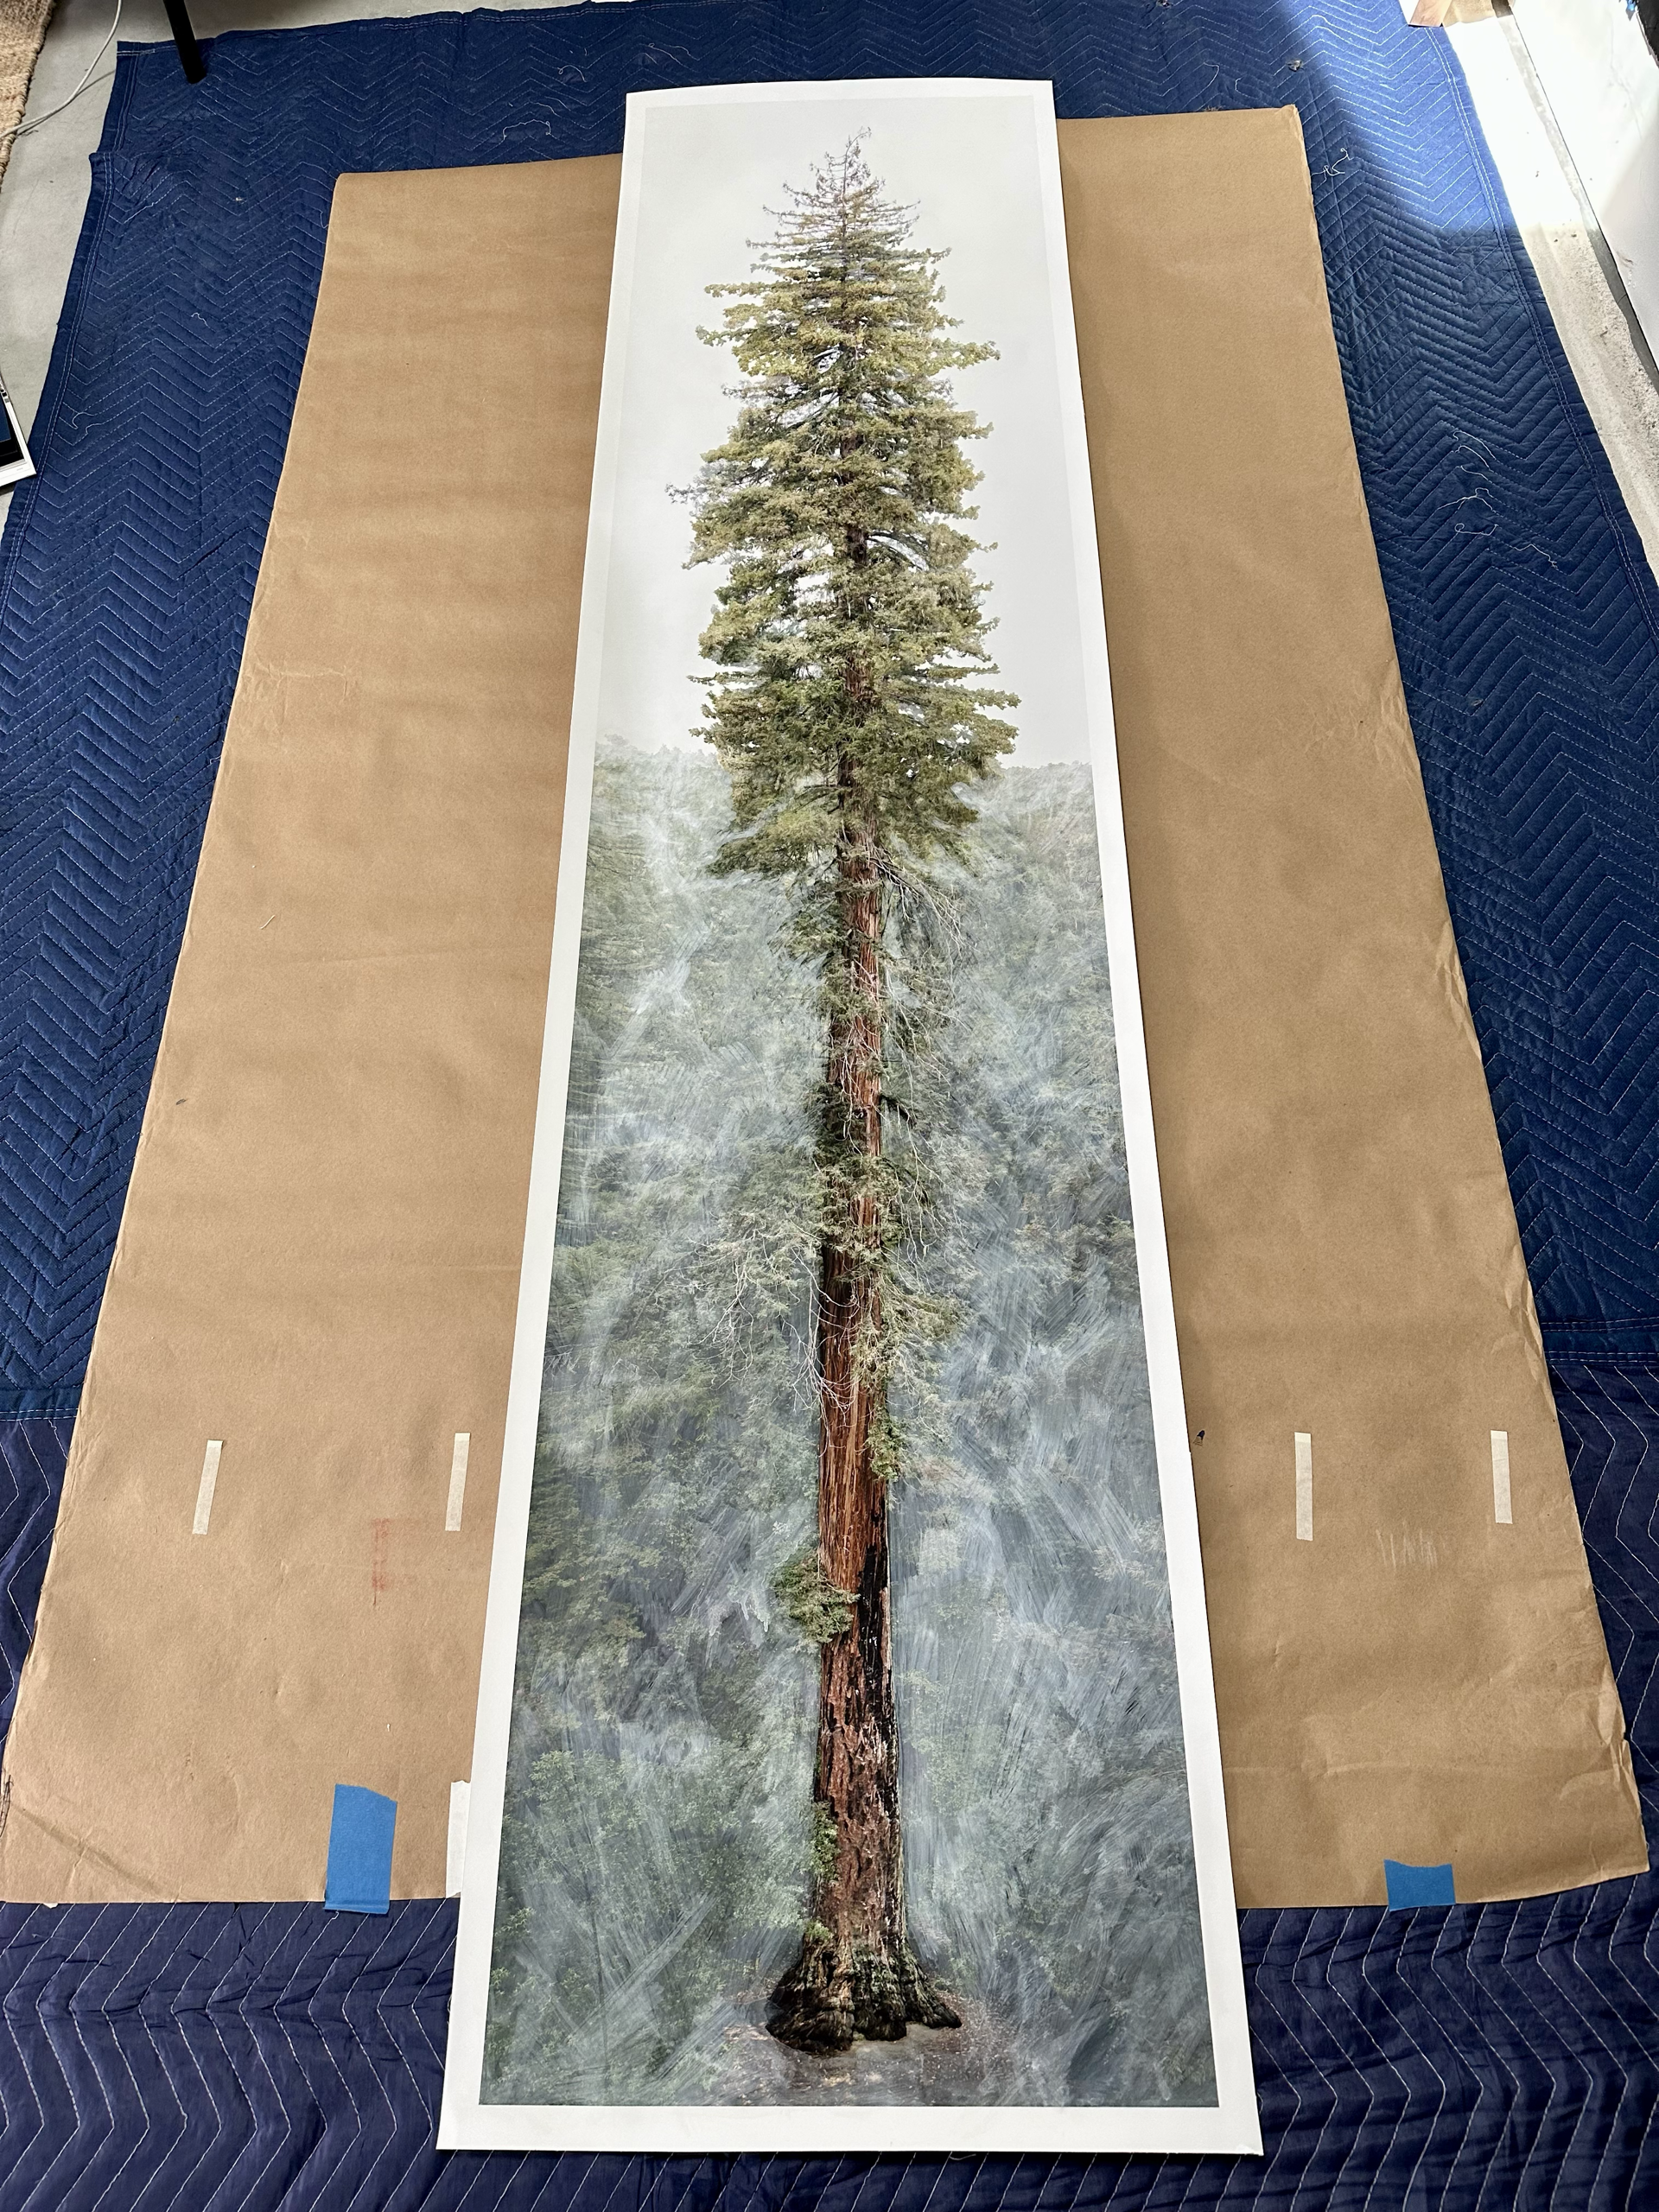 Redwood #5 (Portola Old Tree) by Sarah Bird